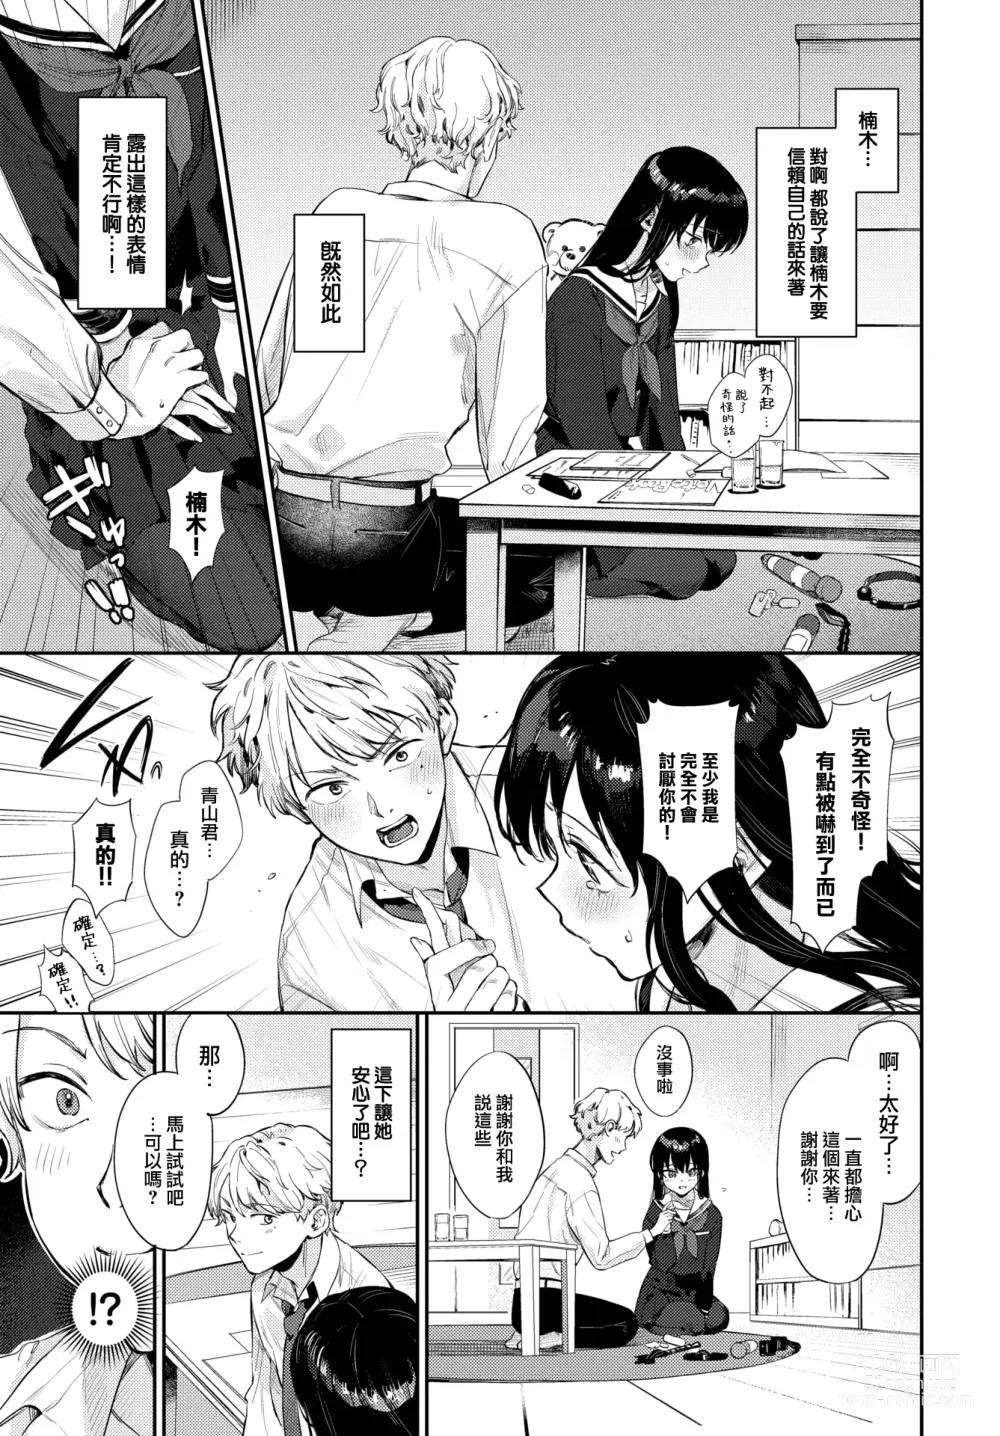 Page 8 of manga Muttsuri Bloom